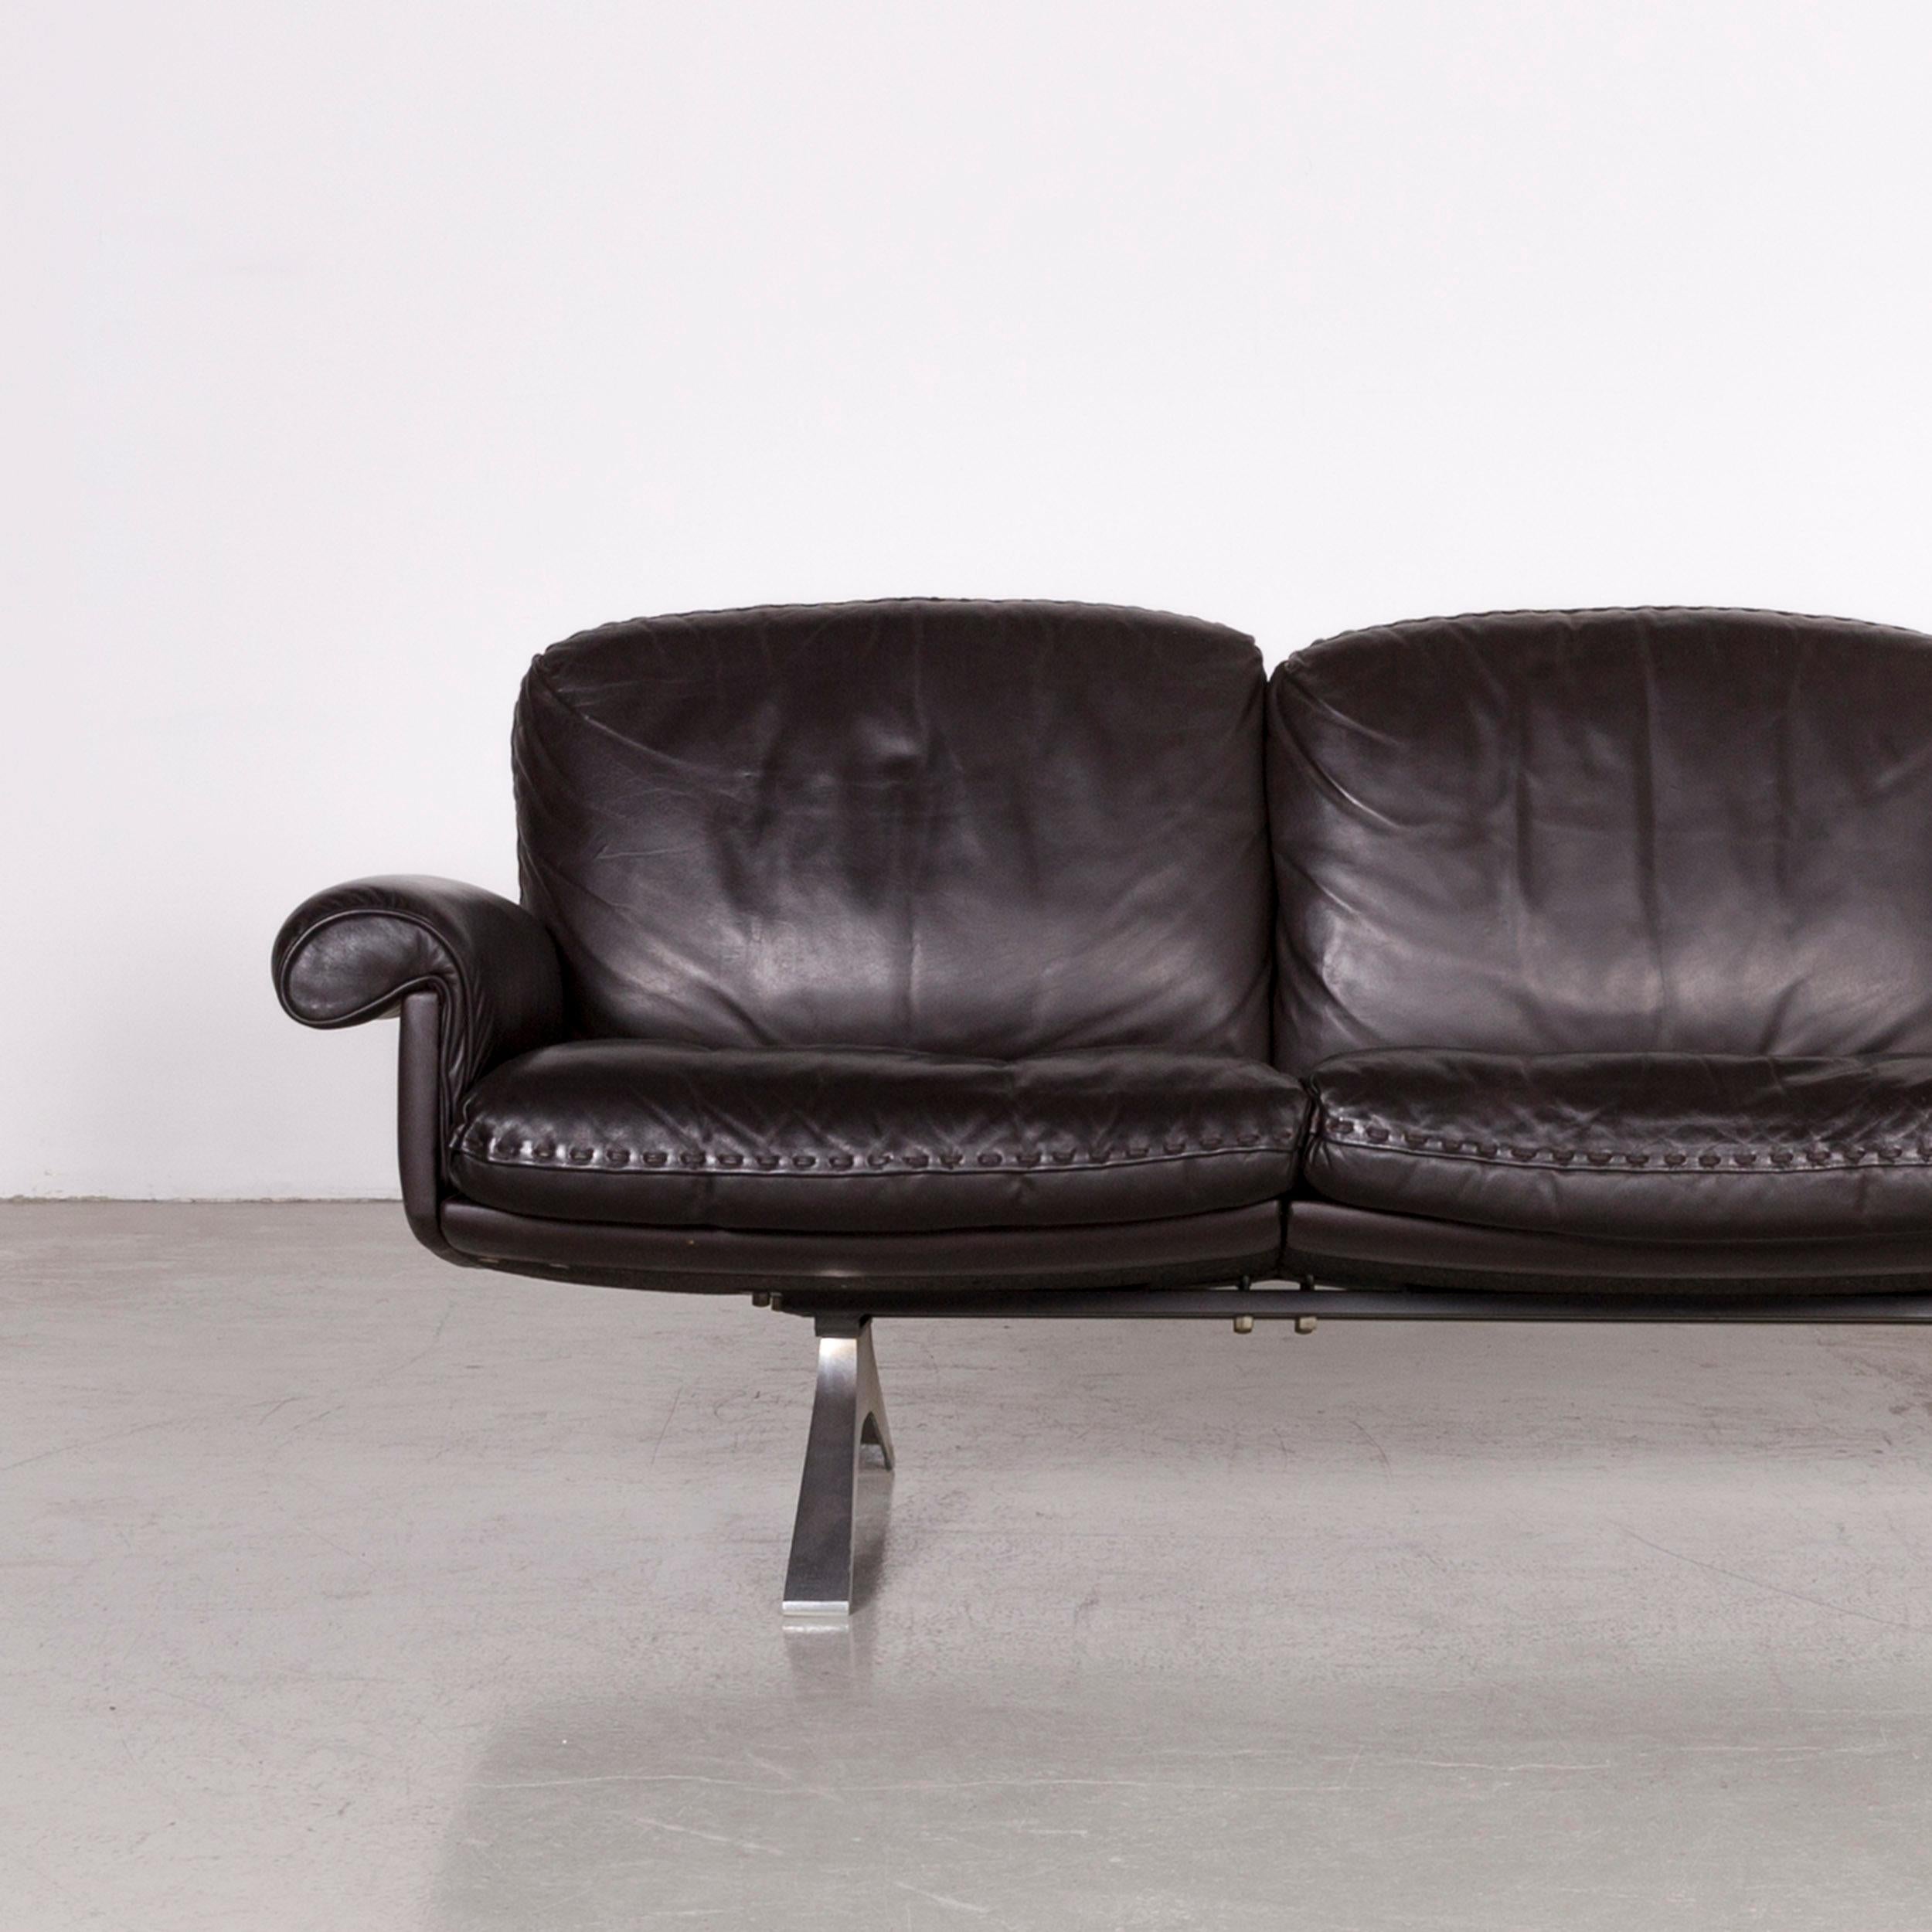 Swiss De Sede Designer Ds 31 Designer Leather Sofa Brown Three-Seat Couch For Sale